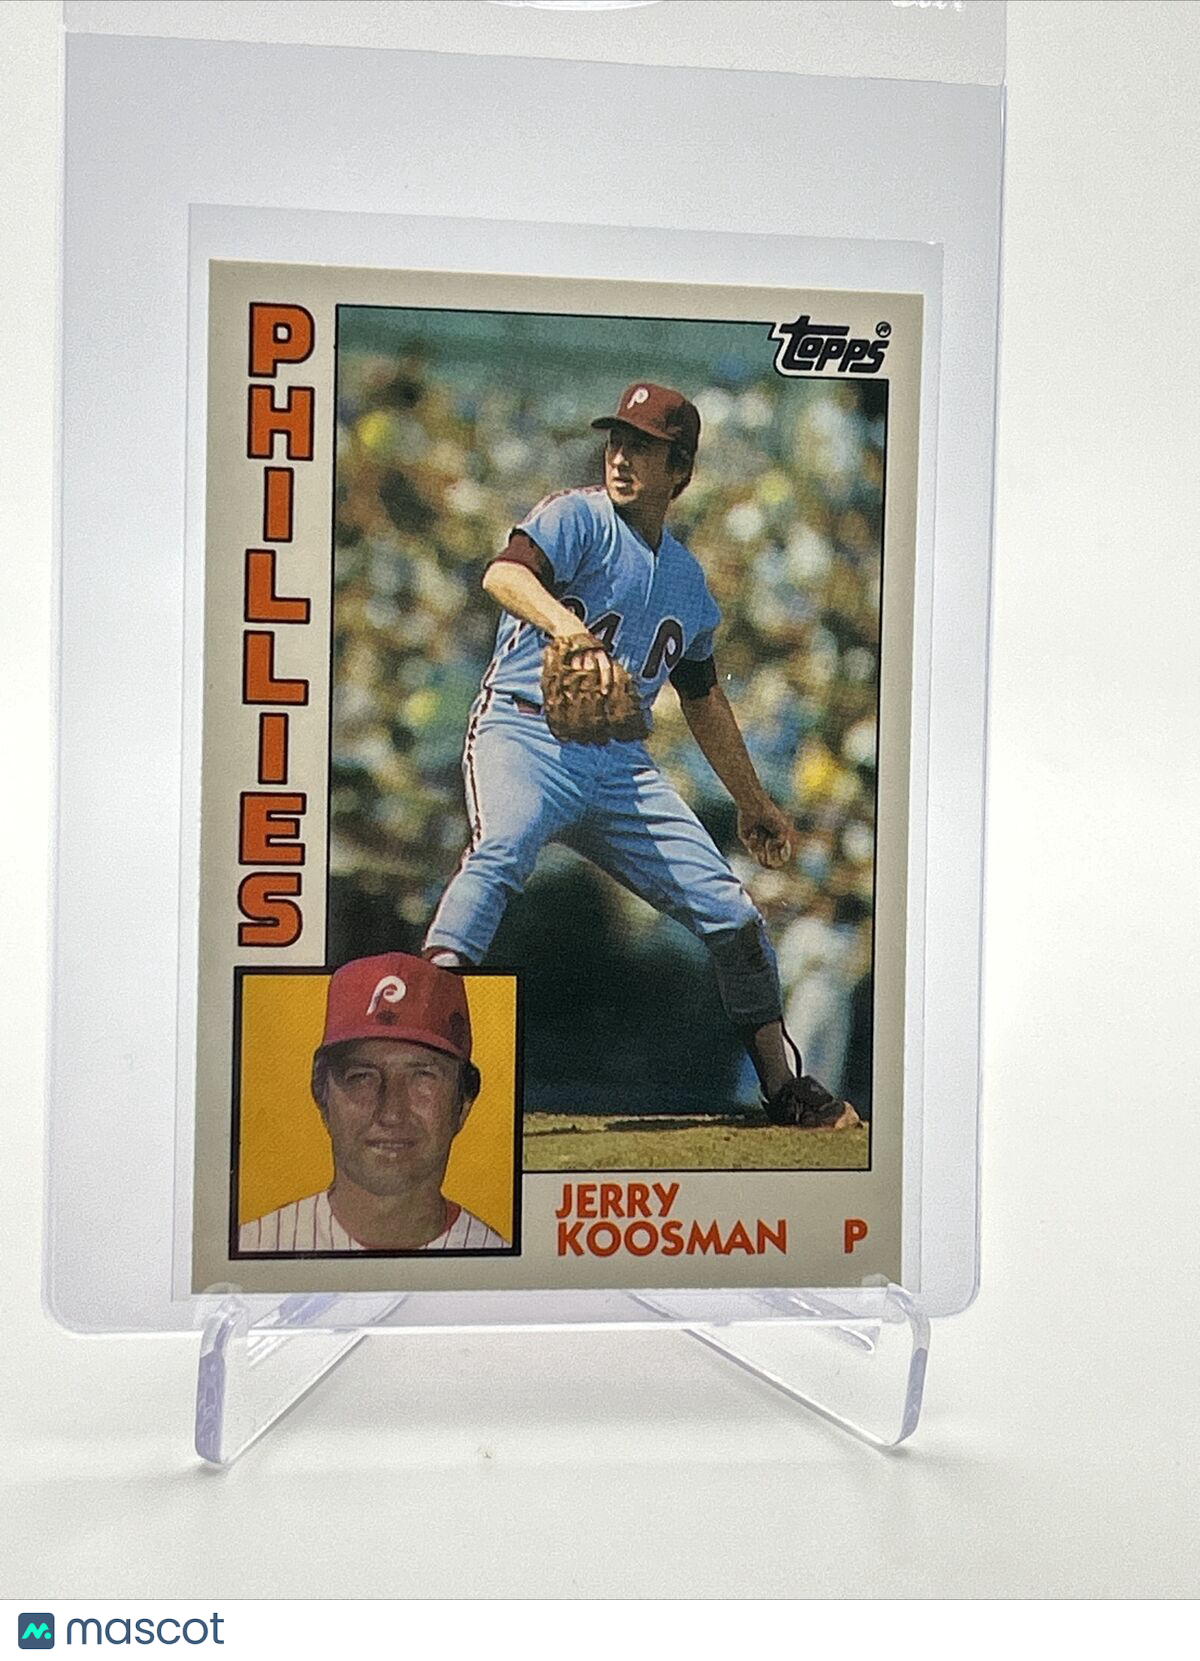 1984 Topps Traded TIFFANY Jerry Koosman Card #64T NM-MT FREE SHIPPING